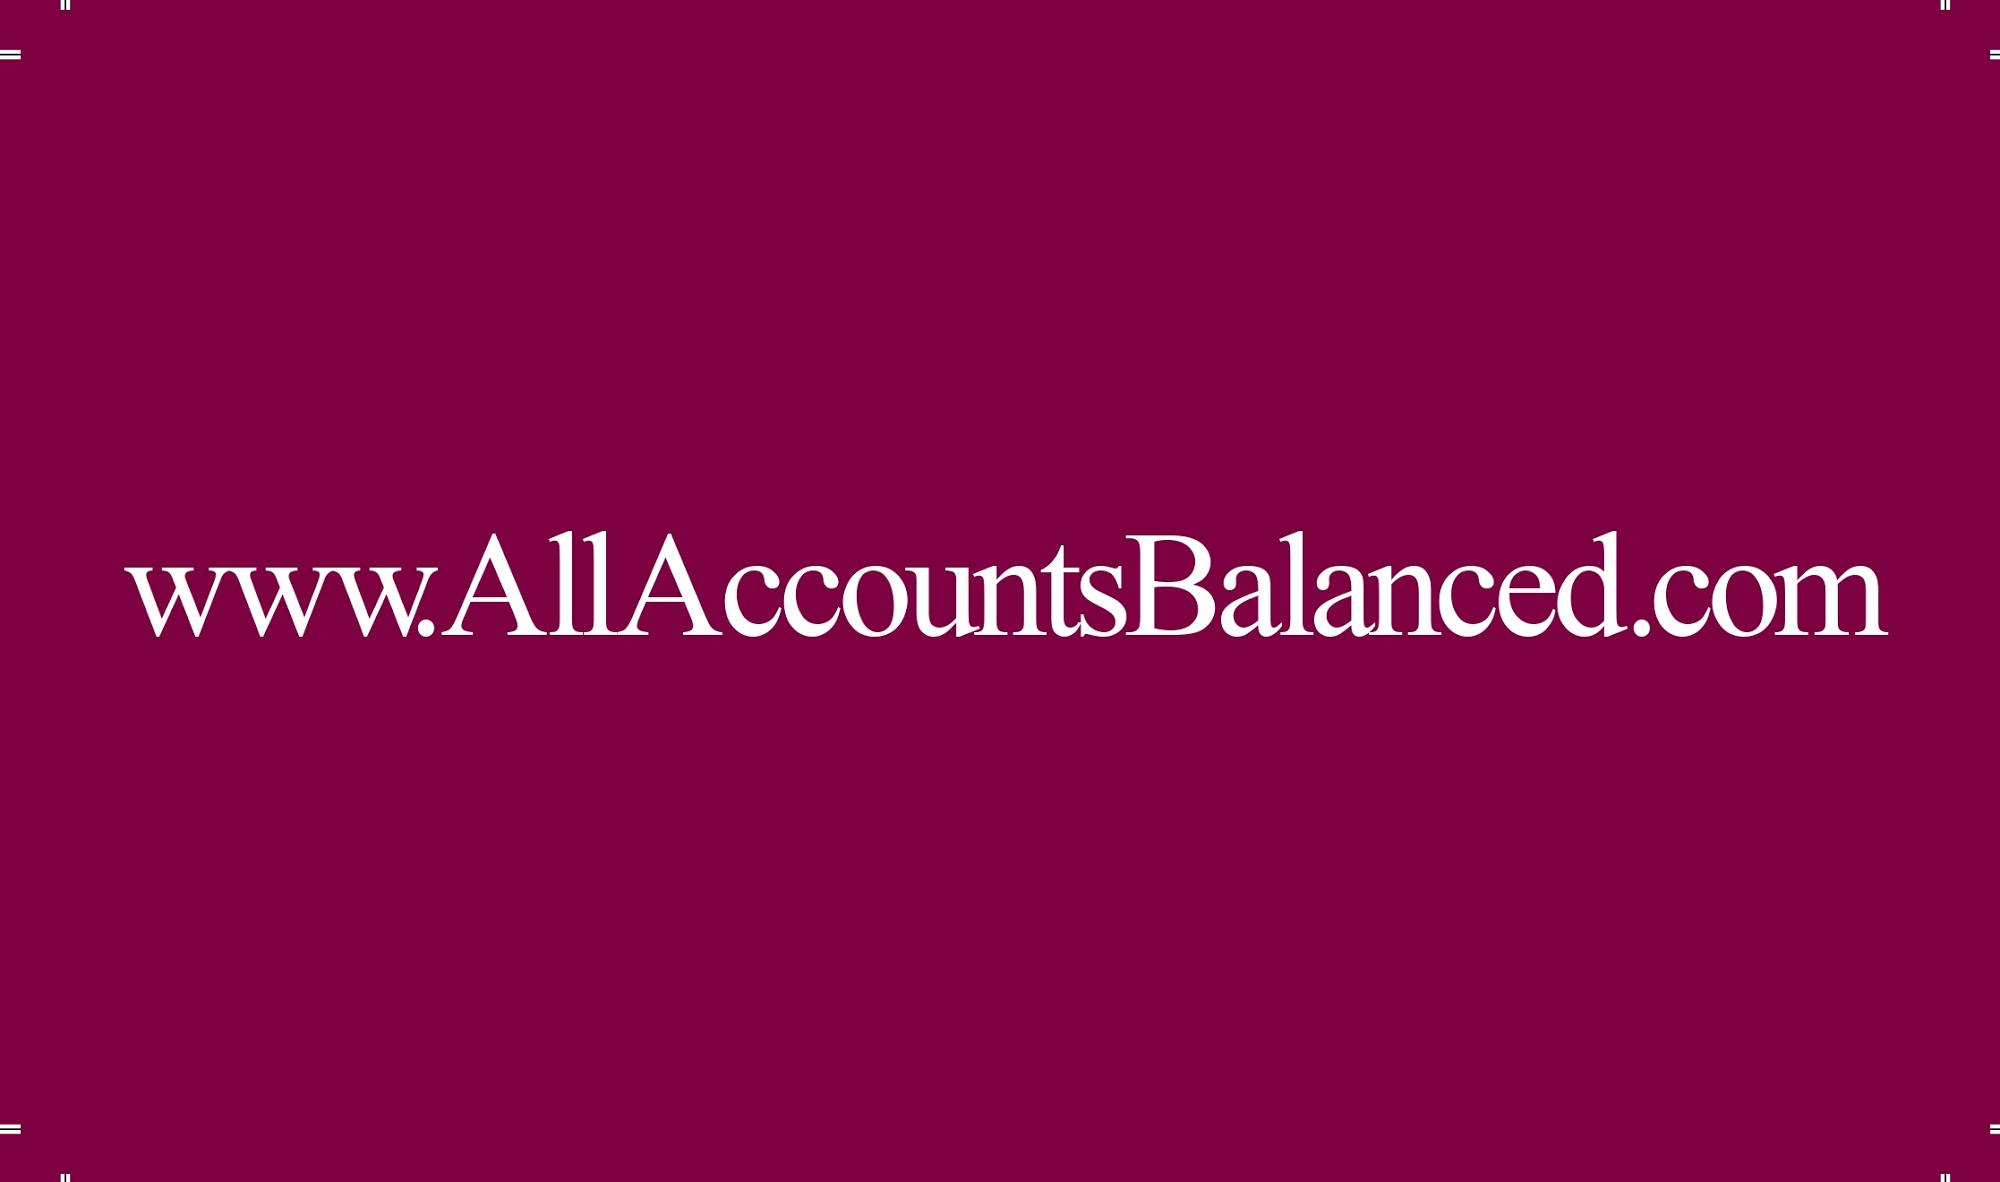 All Accounts Balanced LLC